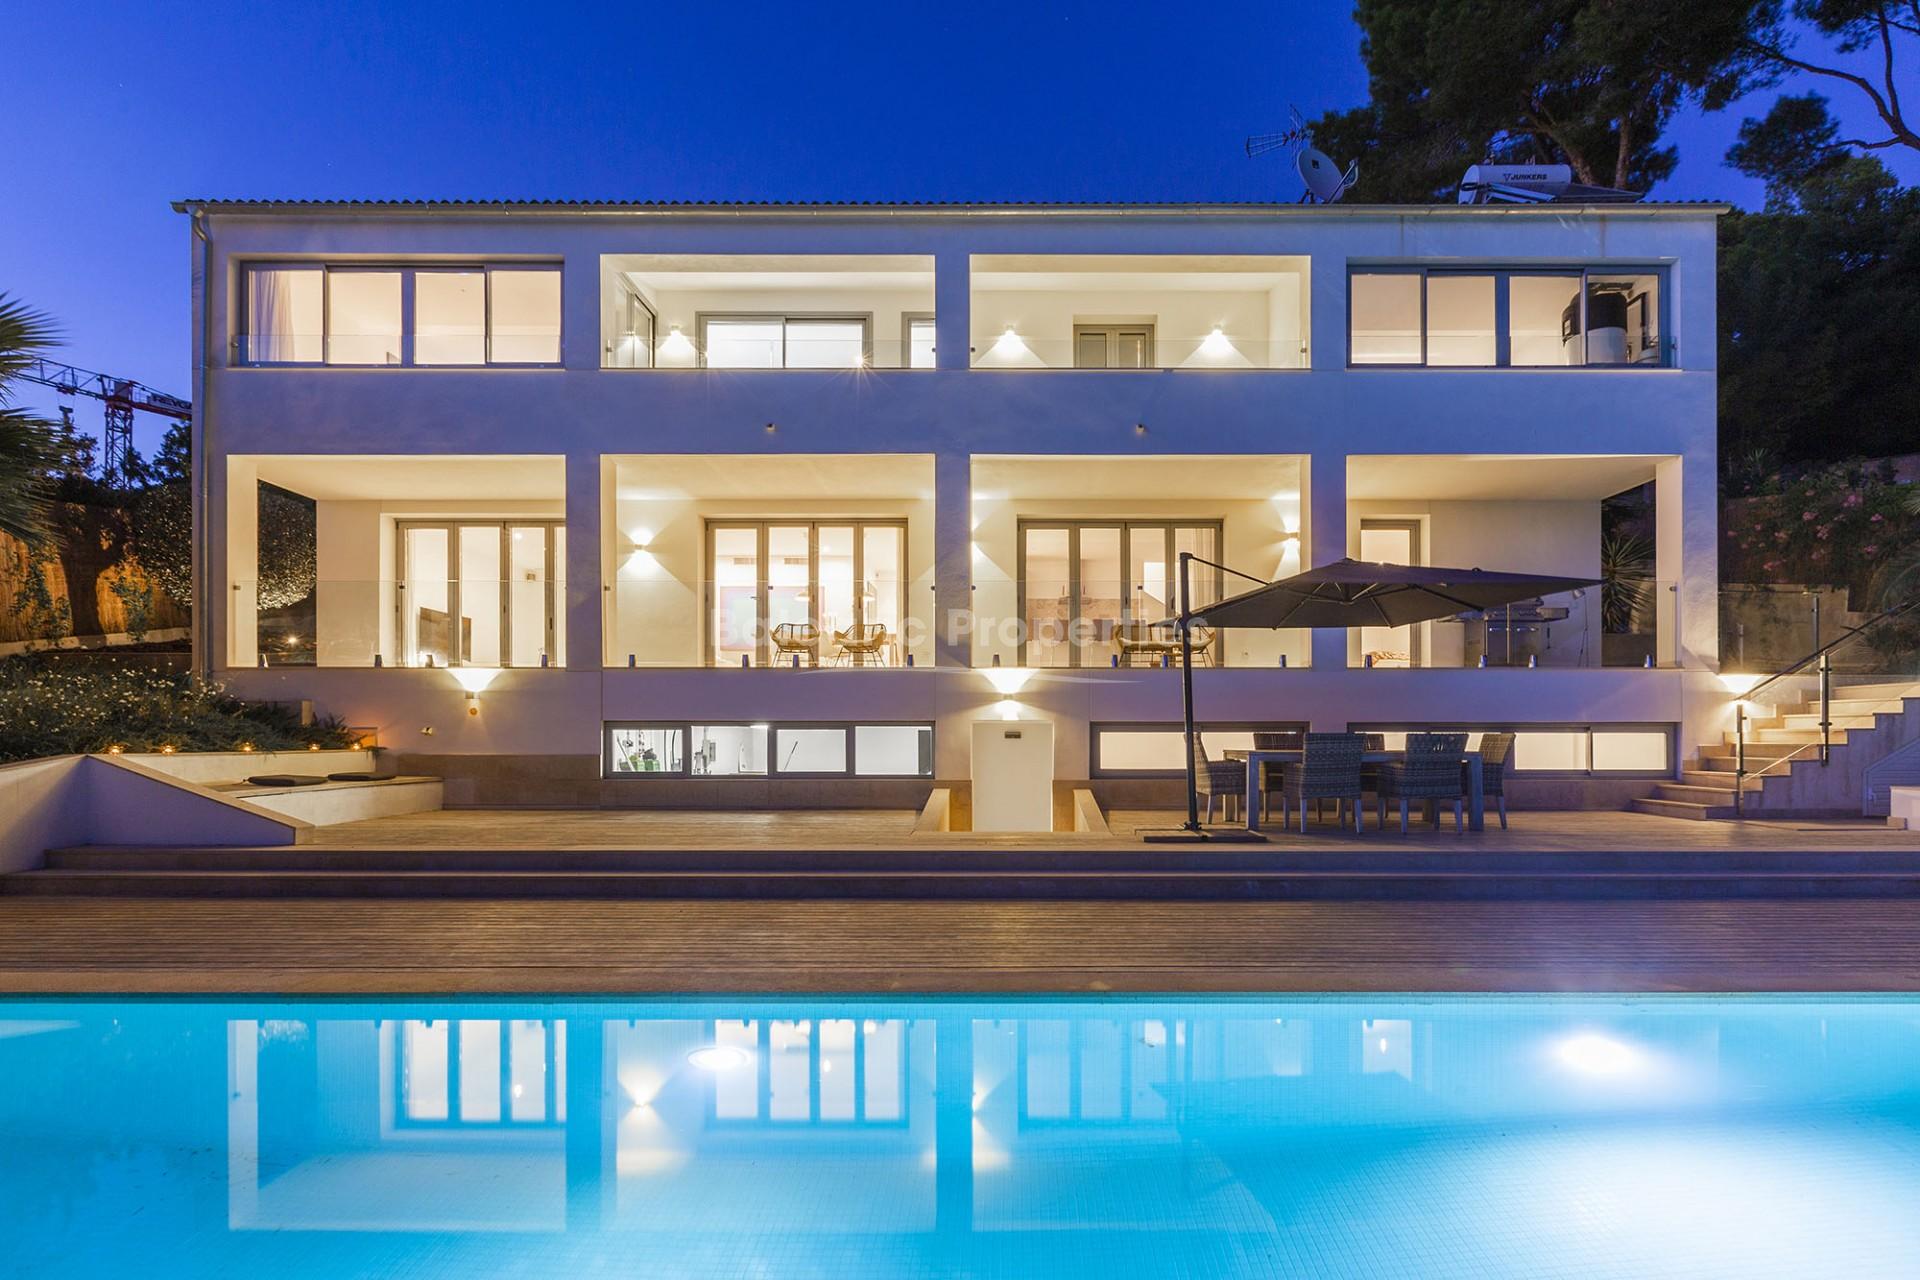 Elegant modern villa with sea views for sale in Costa d'en Blanes, Mallorca